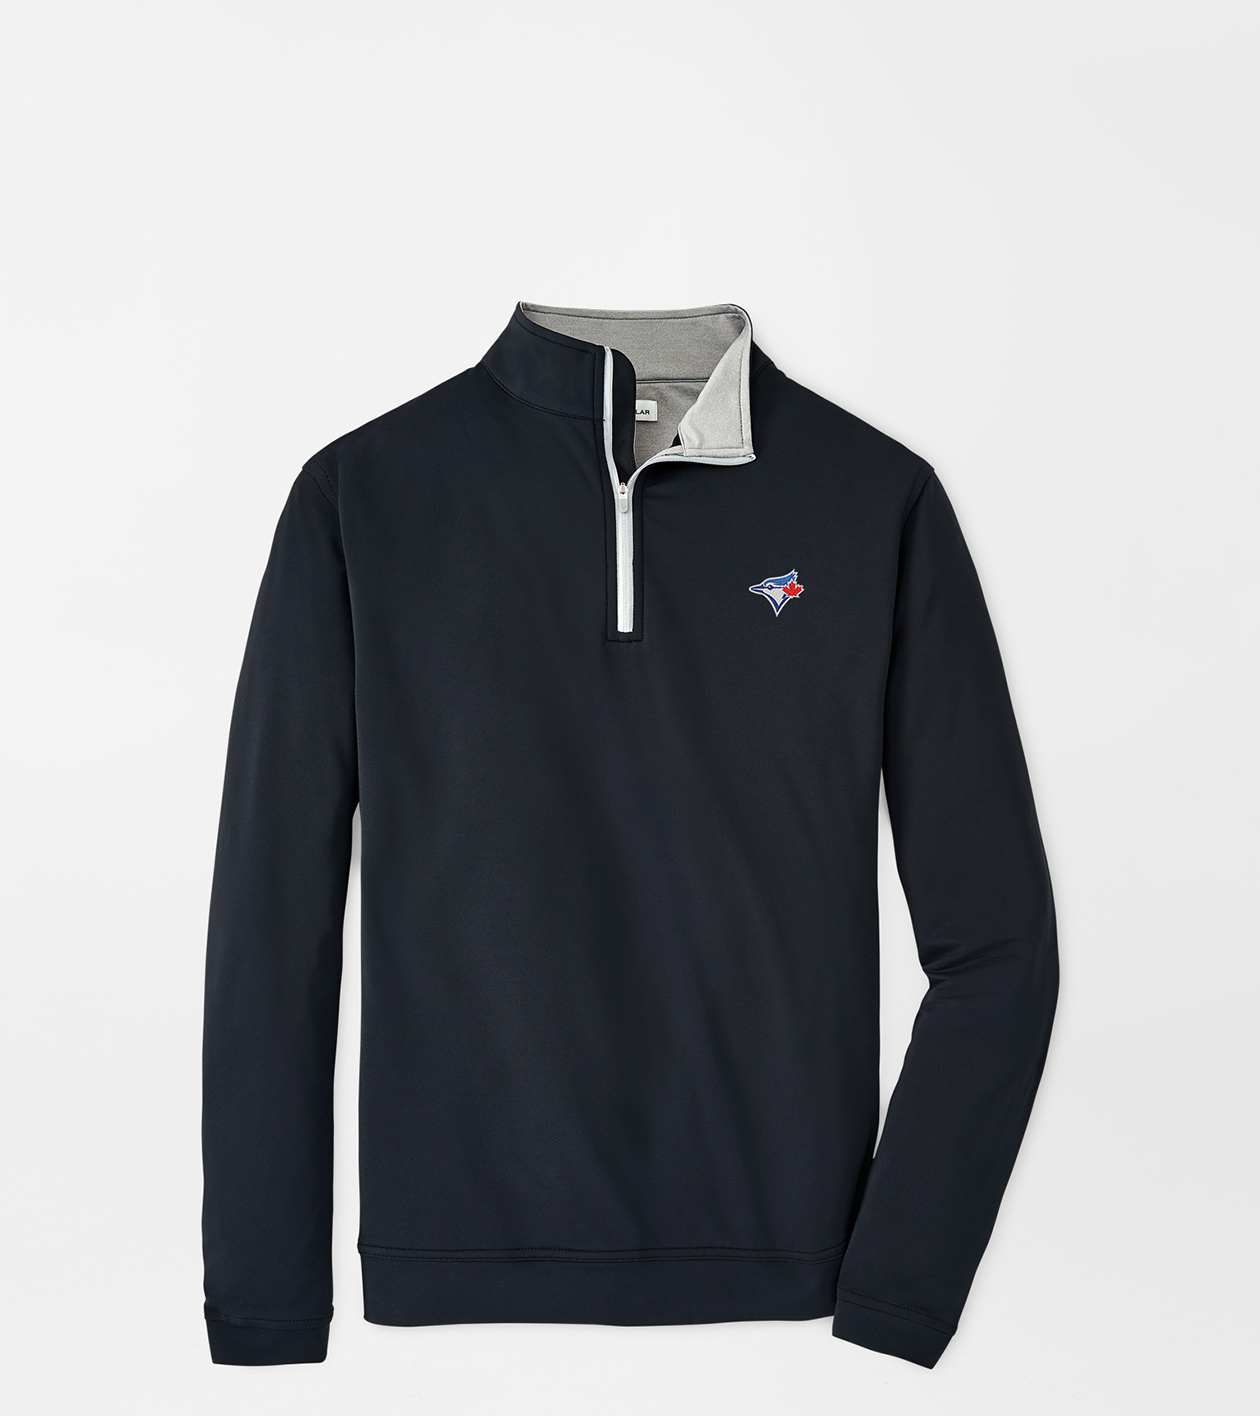 MLB Toronto Blue Jays Logo Golf Polo Shirt For Men And Women